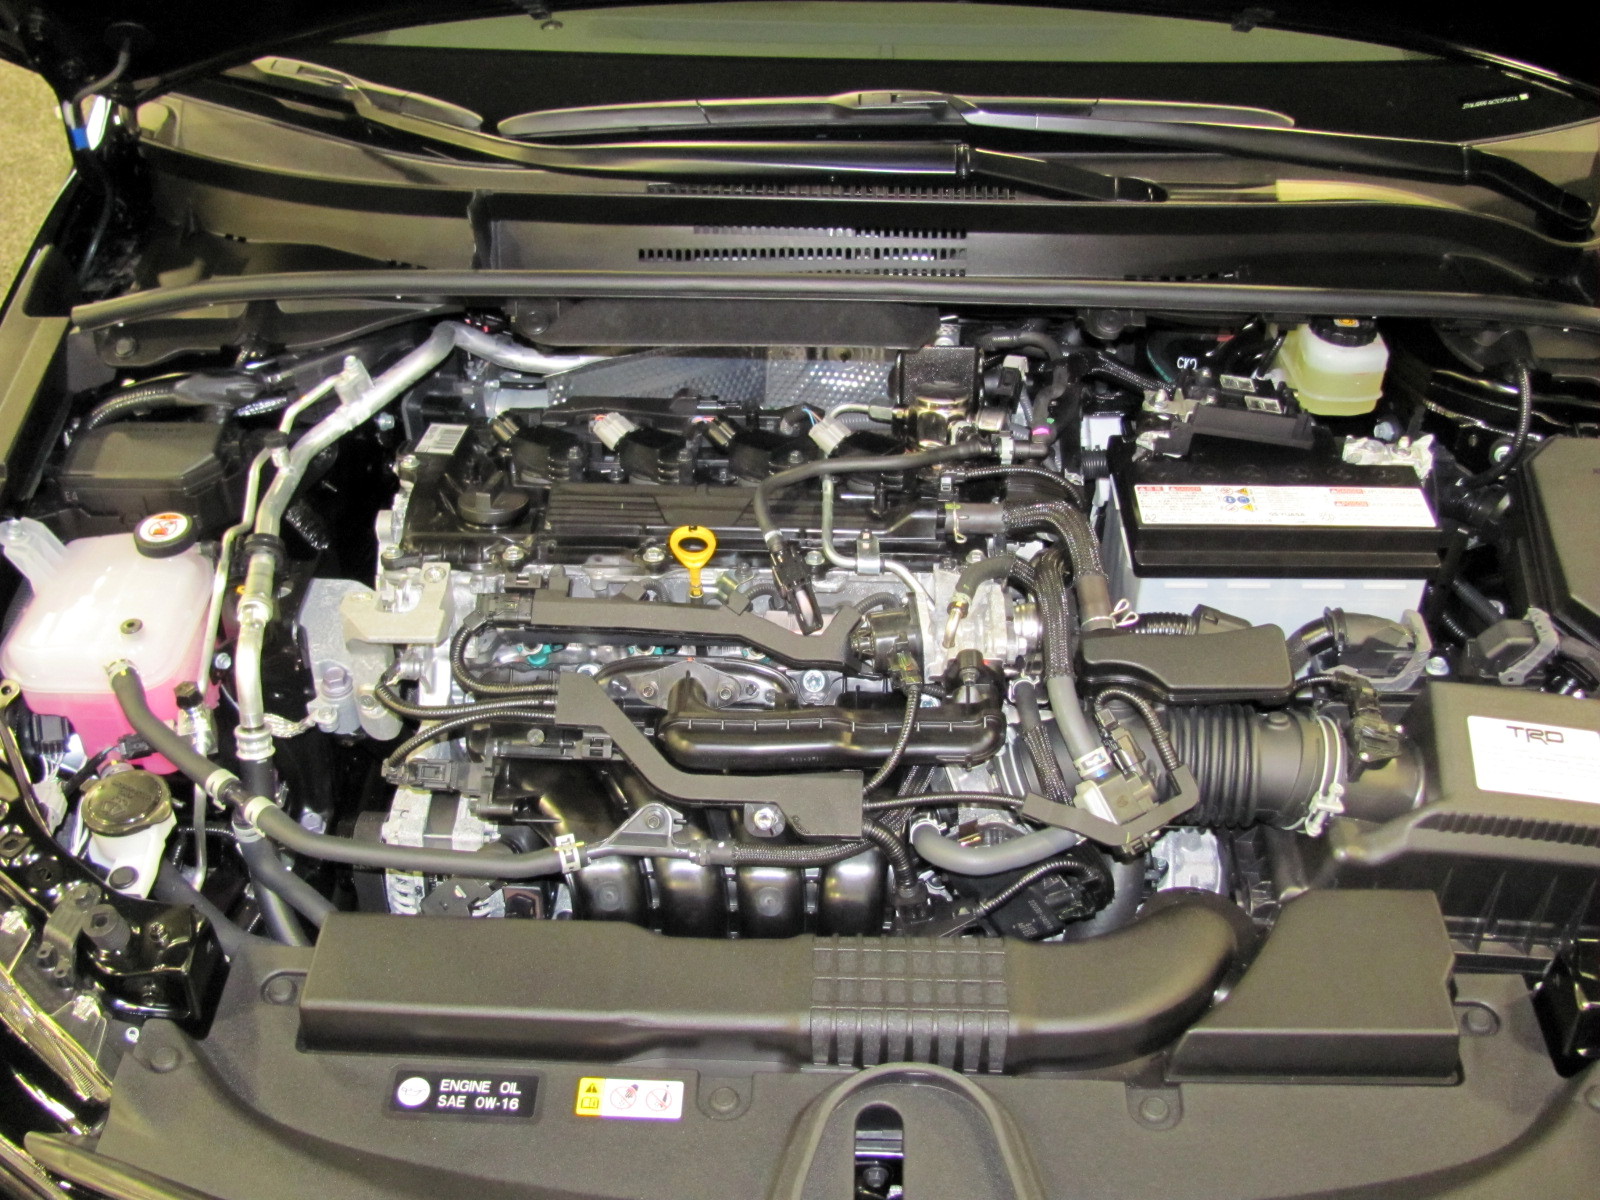 File Ma Fks 19 Toyota Engine Corolla Hb E210 Jpg Wikimedia Commons